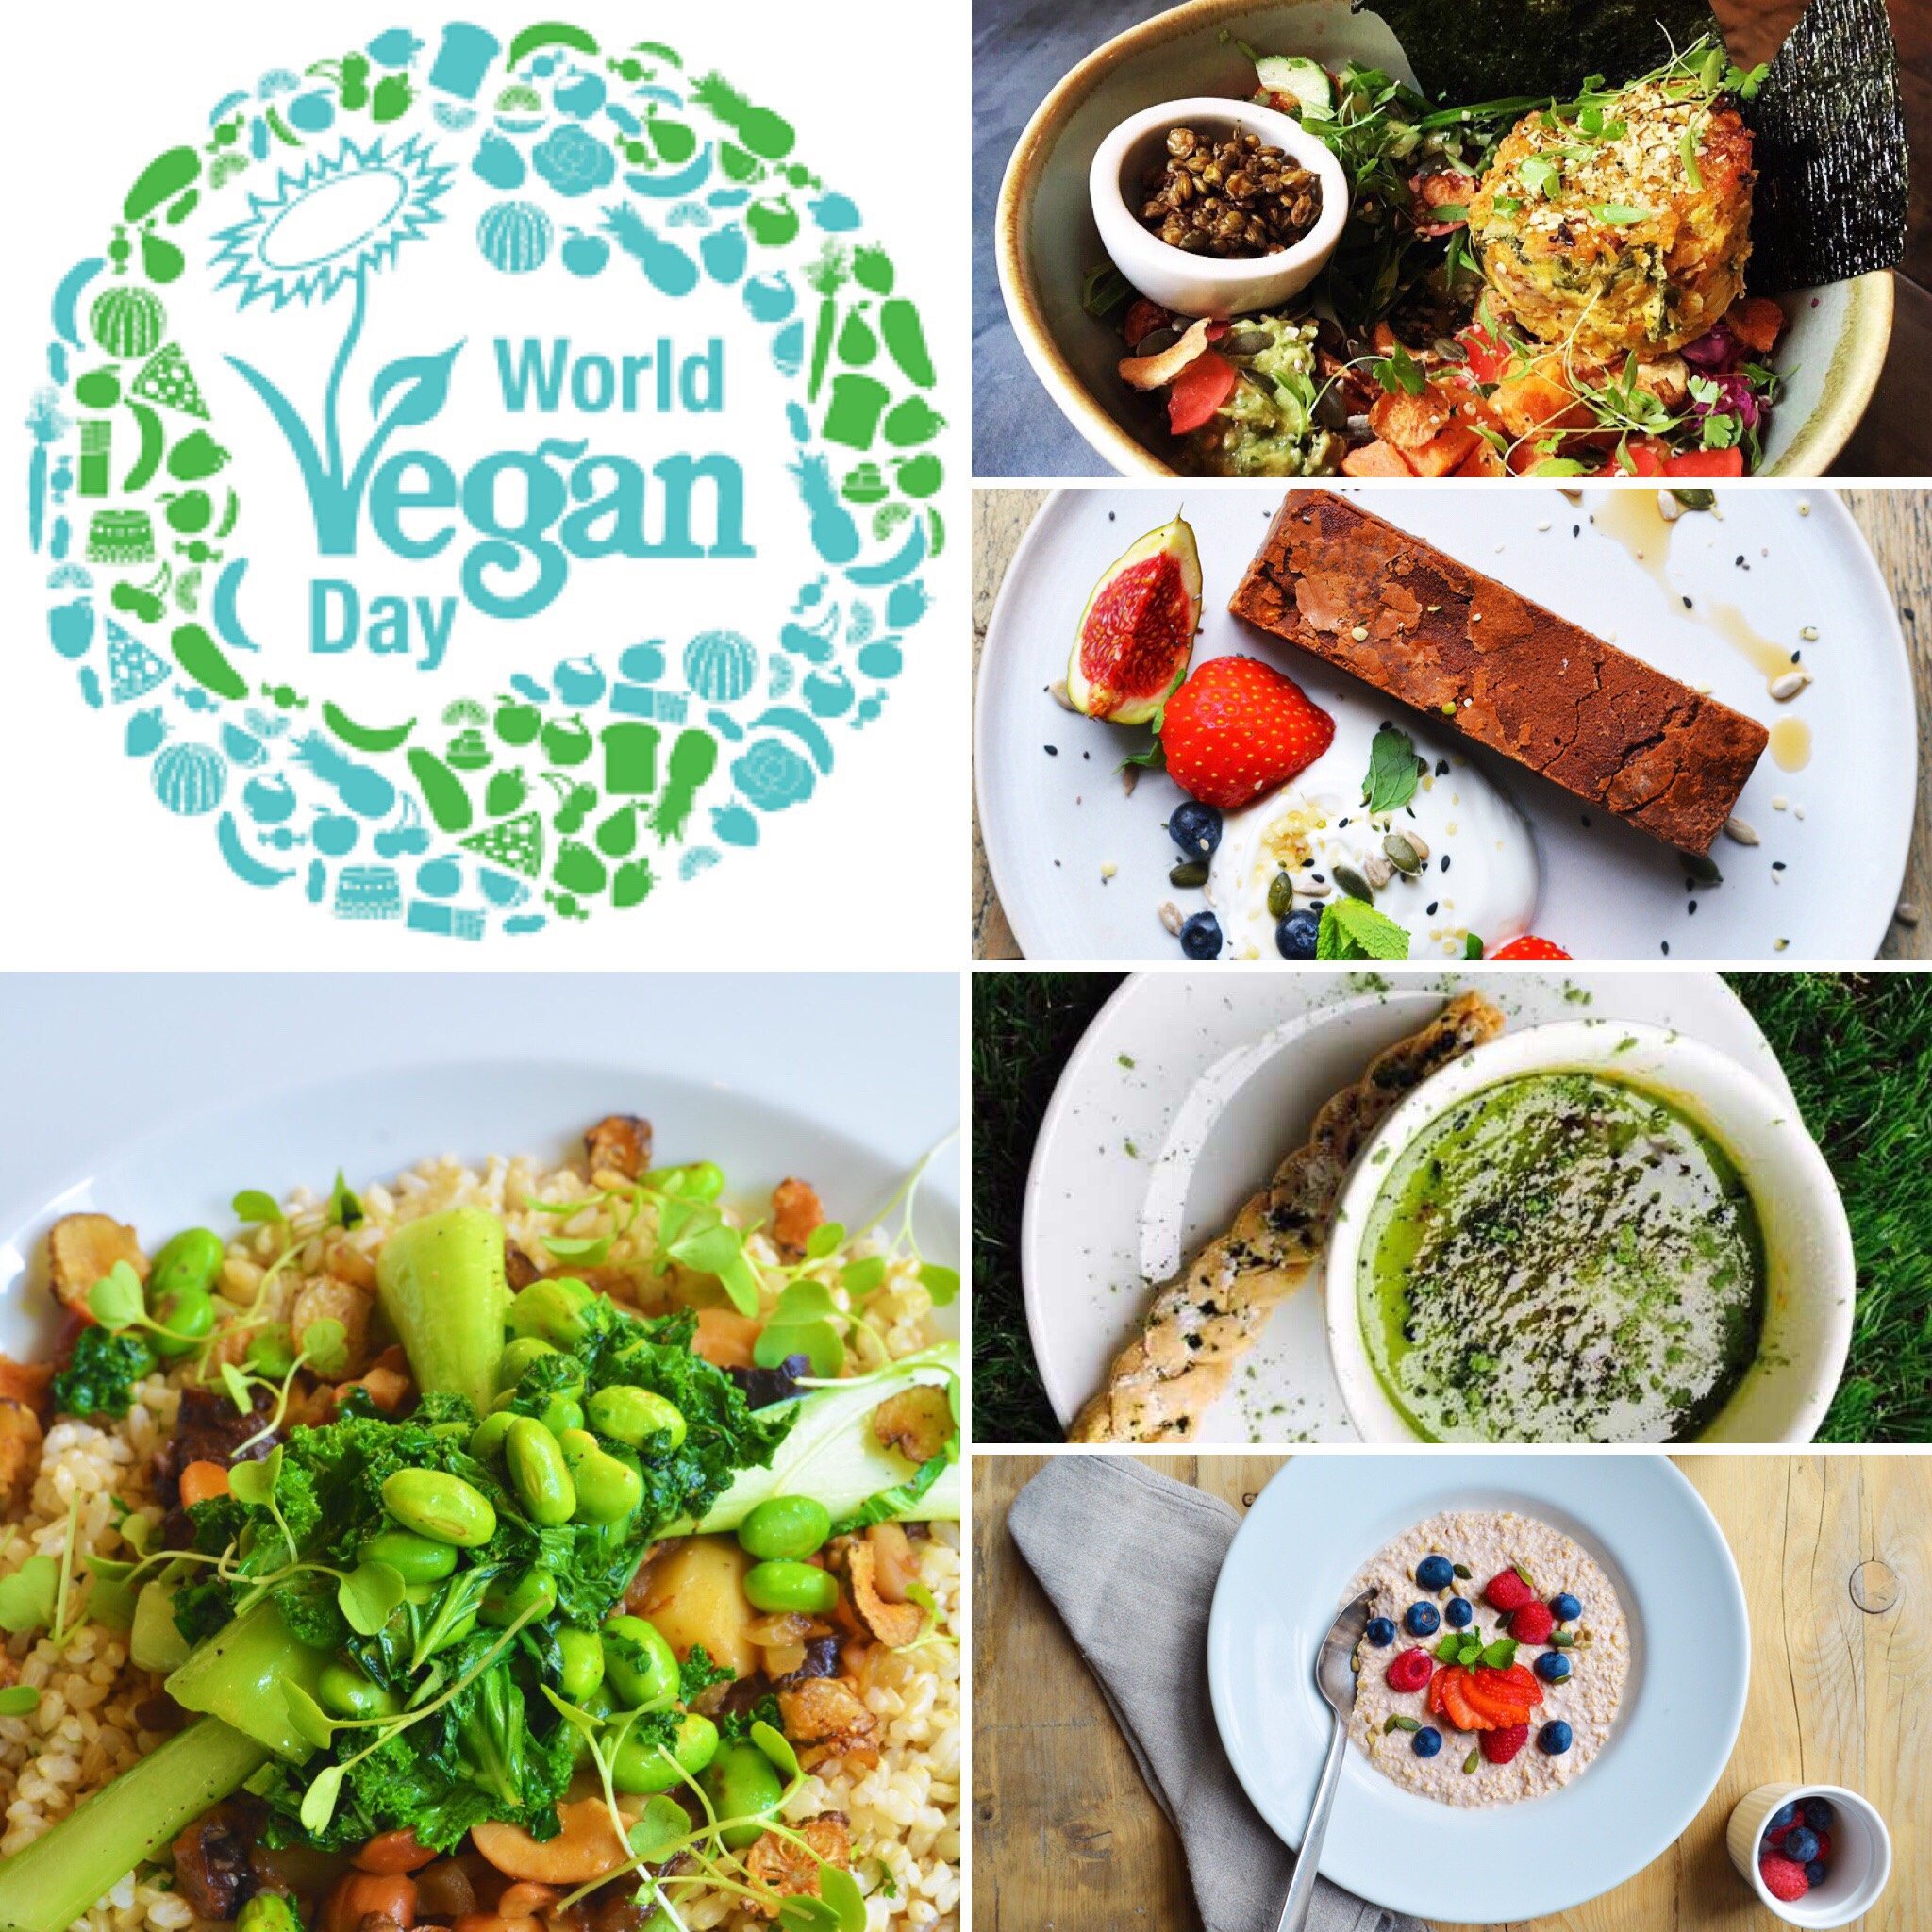 World Vegan Day veg food picture